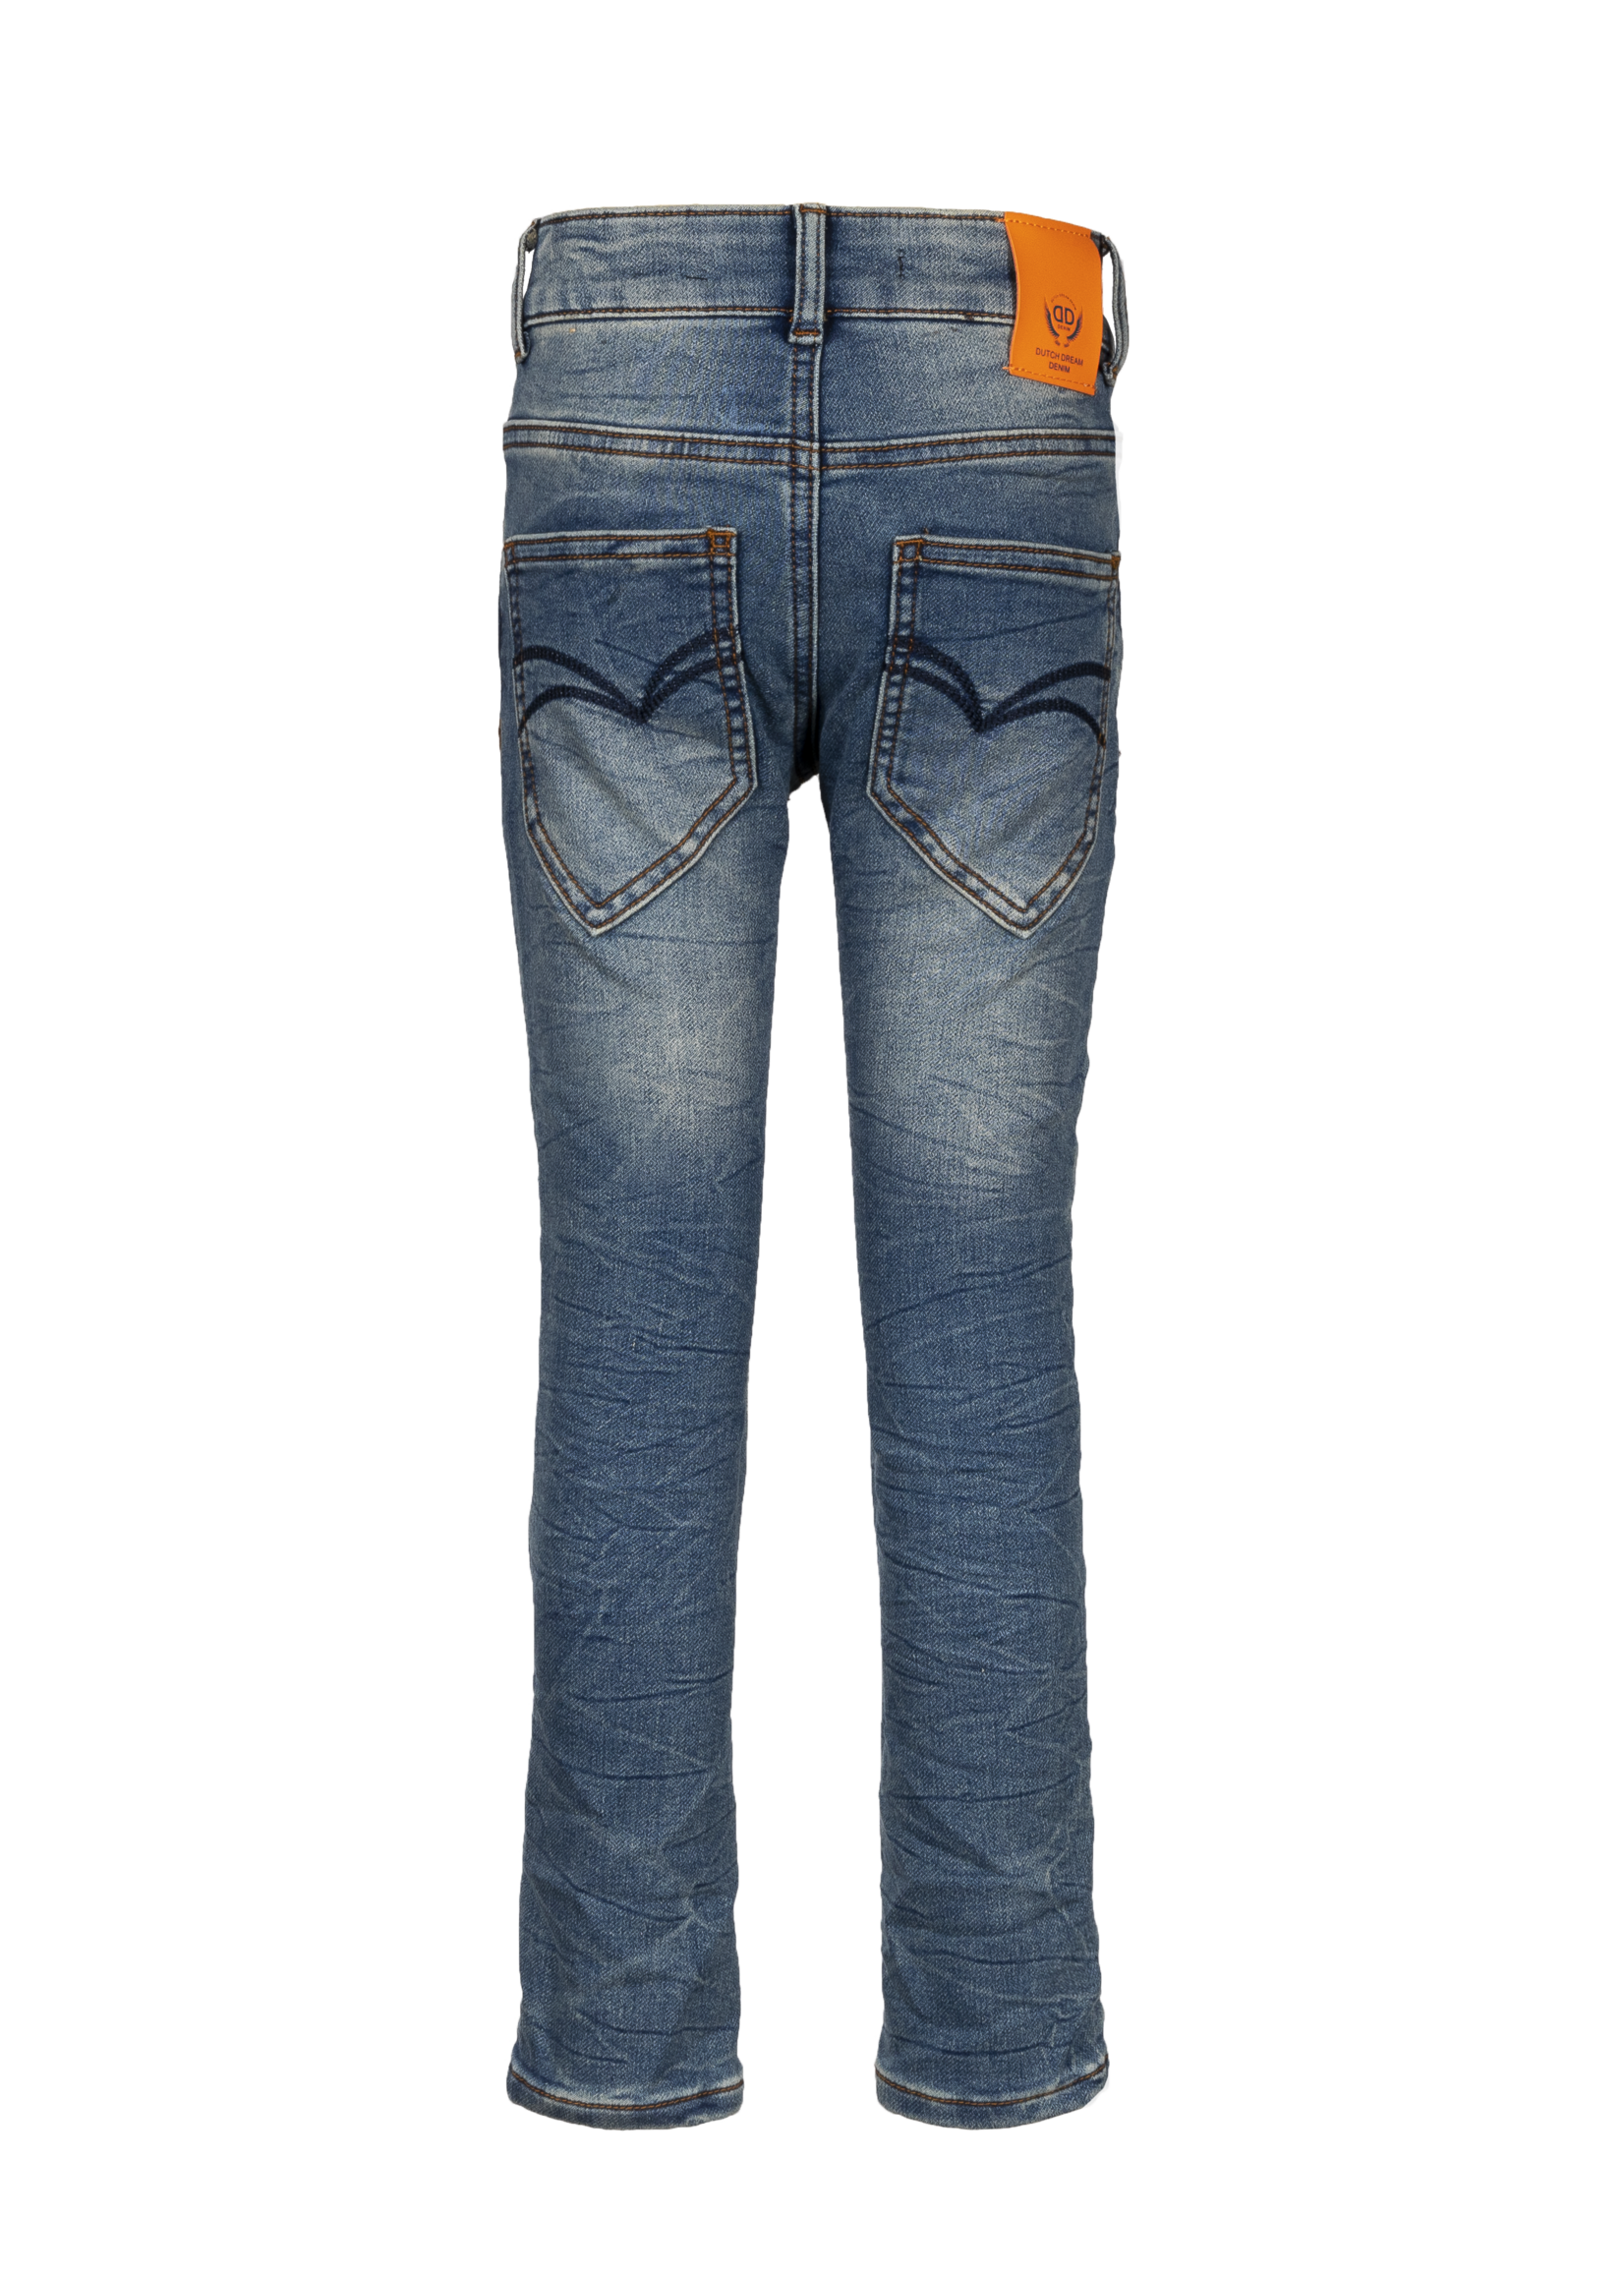 Dutch dream denim JUHUDI, SLIM FIT jogg jeans  met dubbele laag stof op de knieën